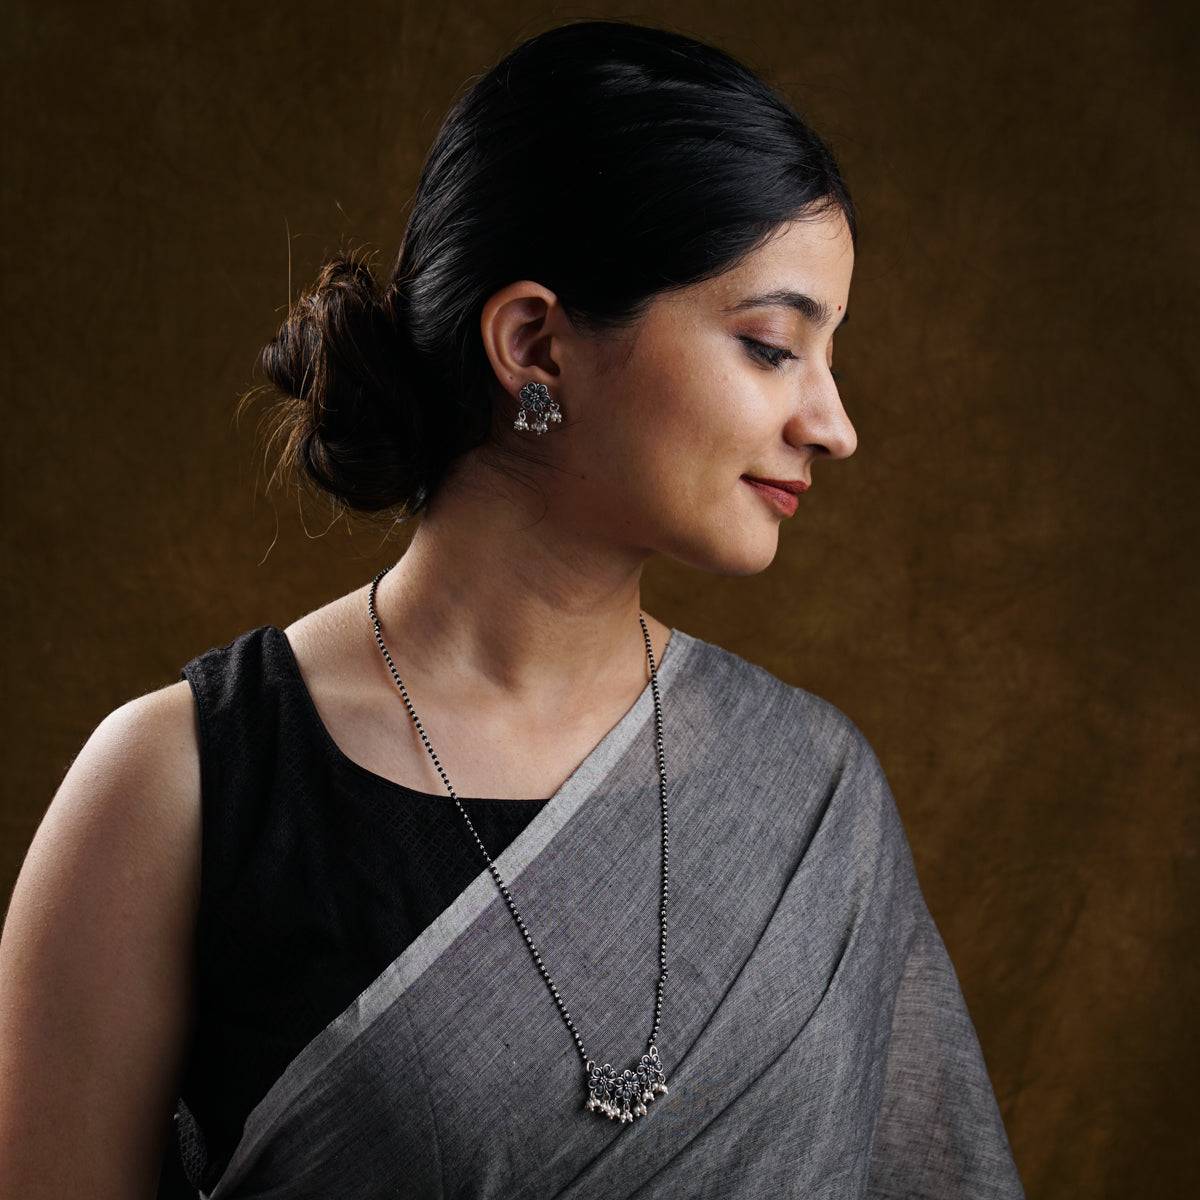 a woman wearing a black and grey sari